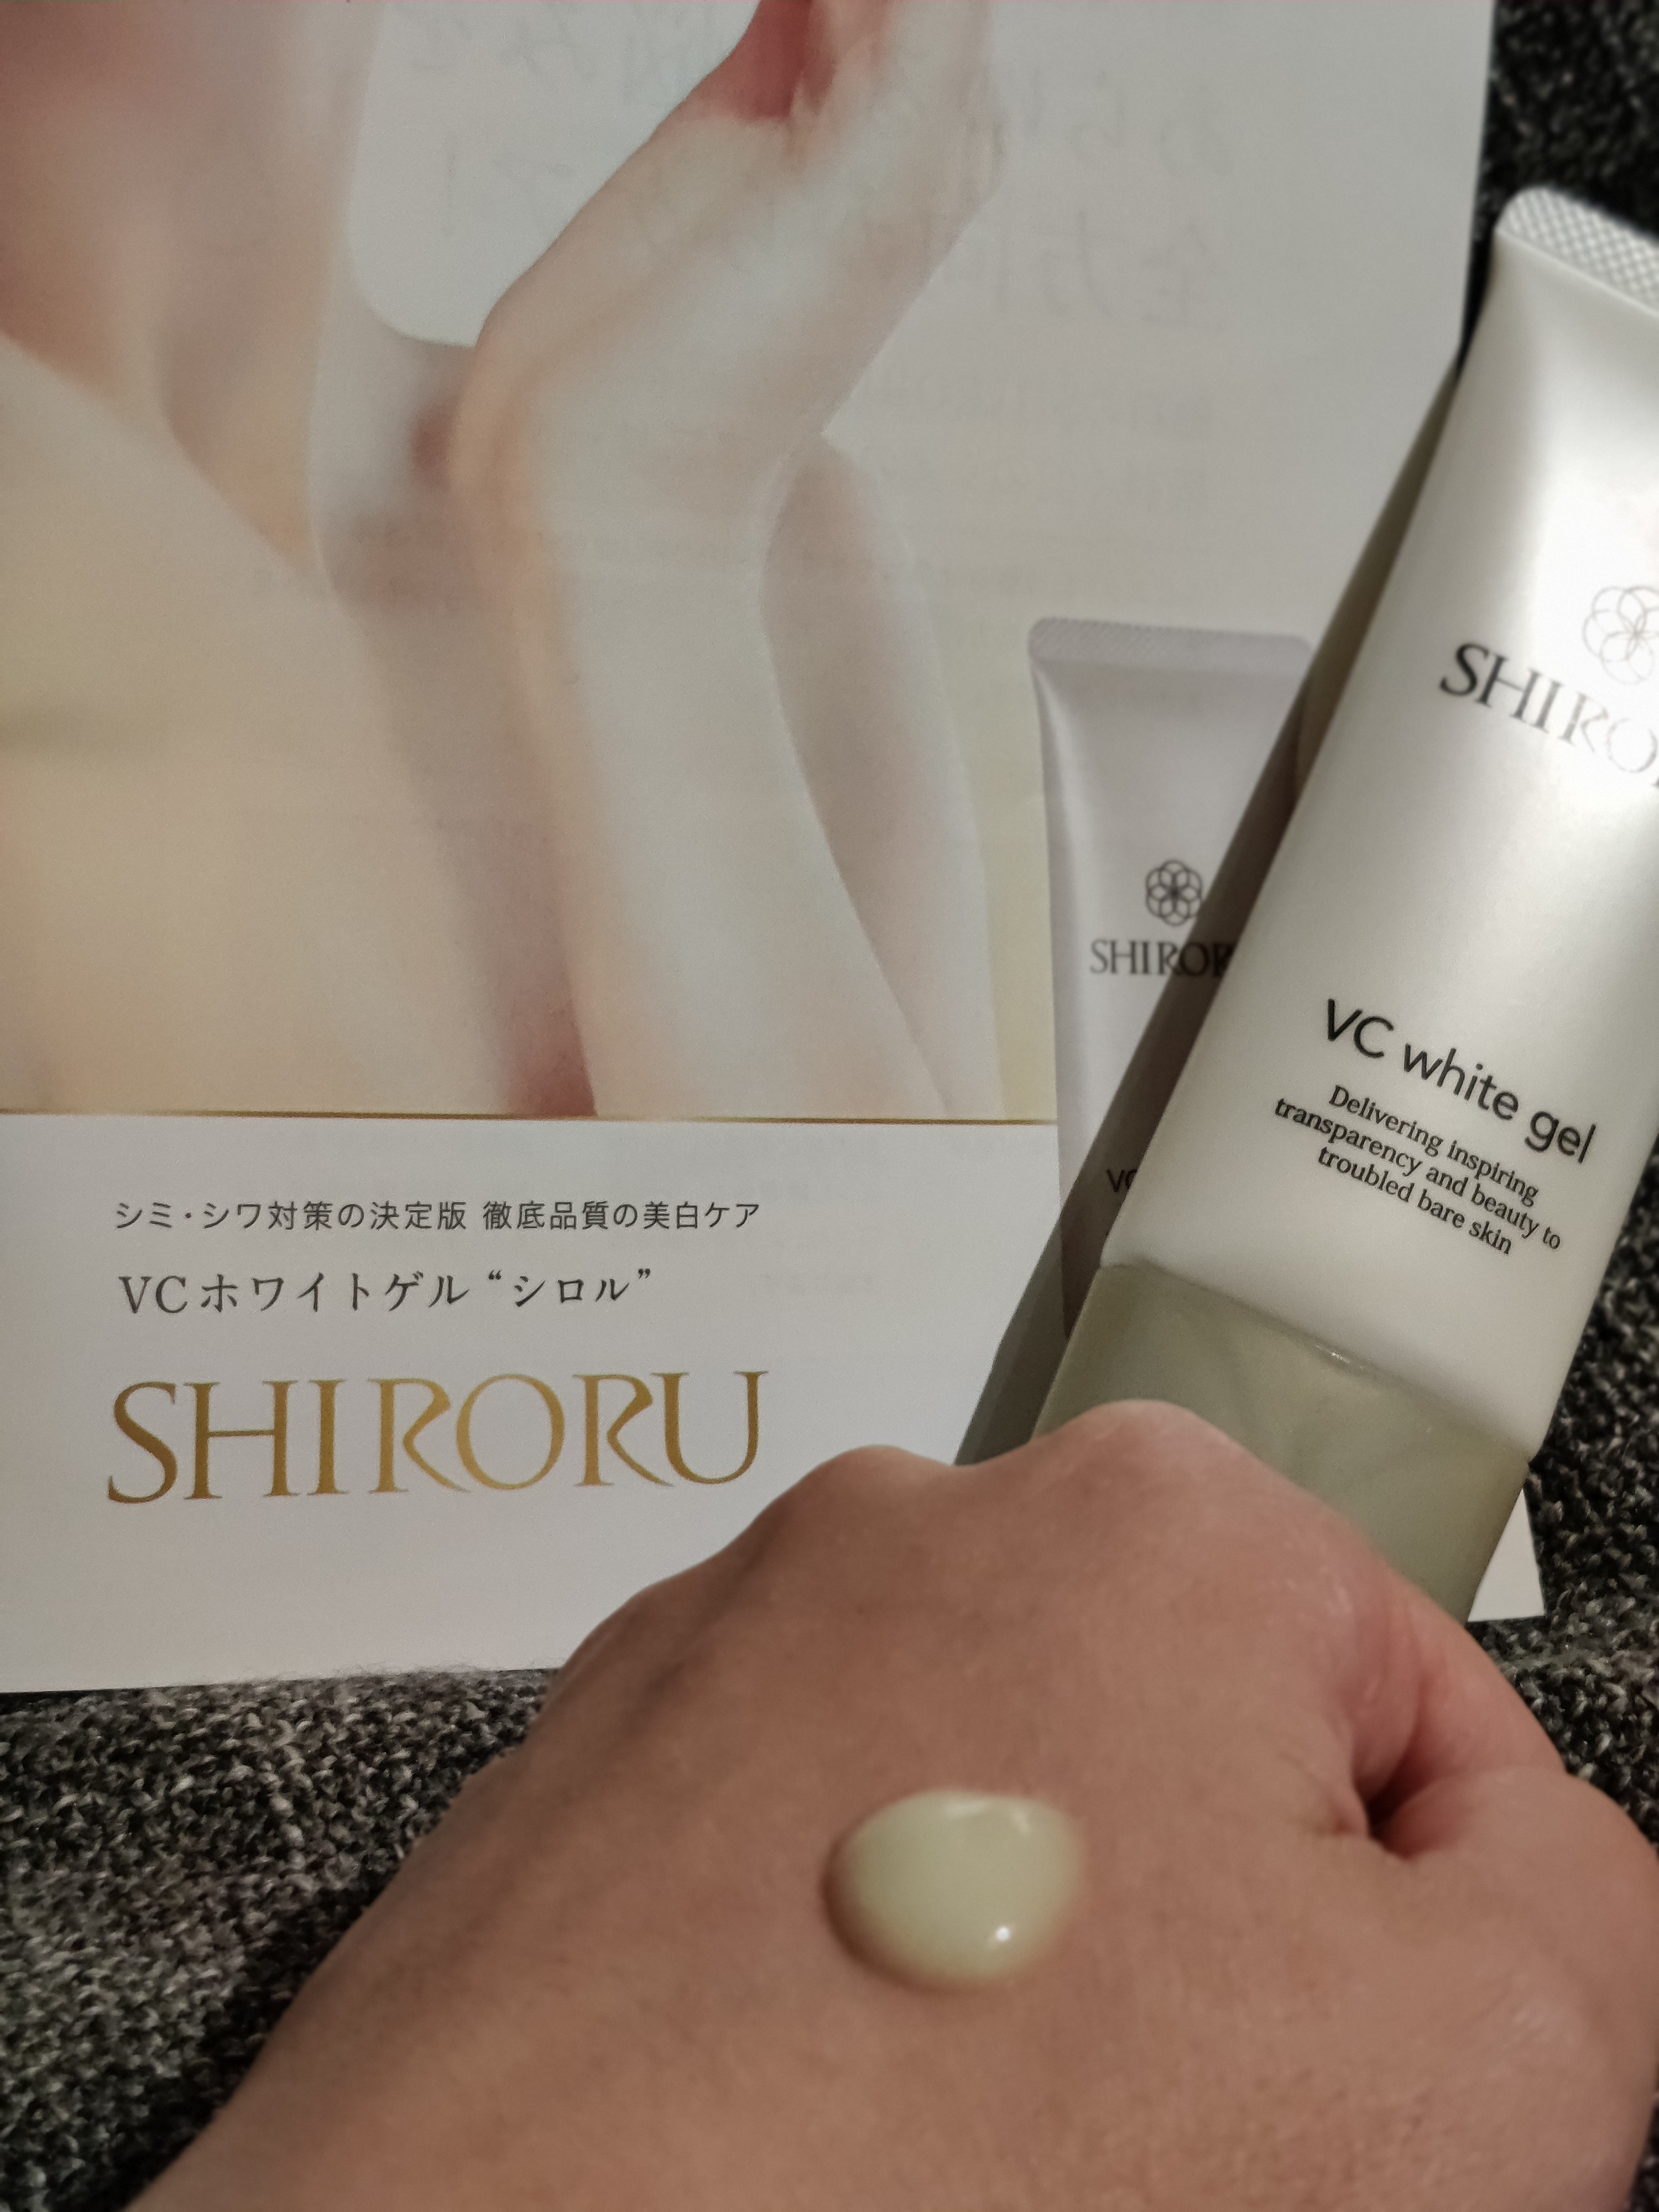 SHIRORU / VC ホワイトゲルの公式商品情報｜美容・化粧品情報はアット 